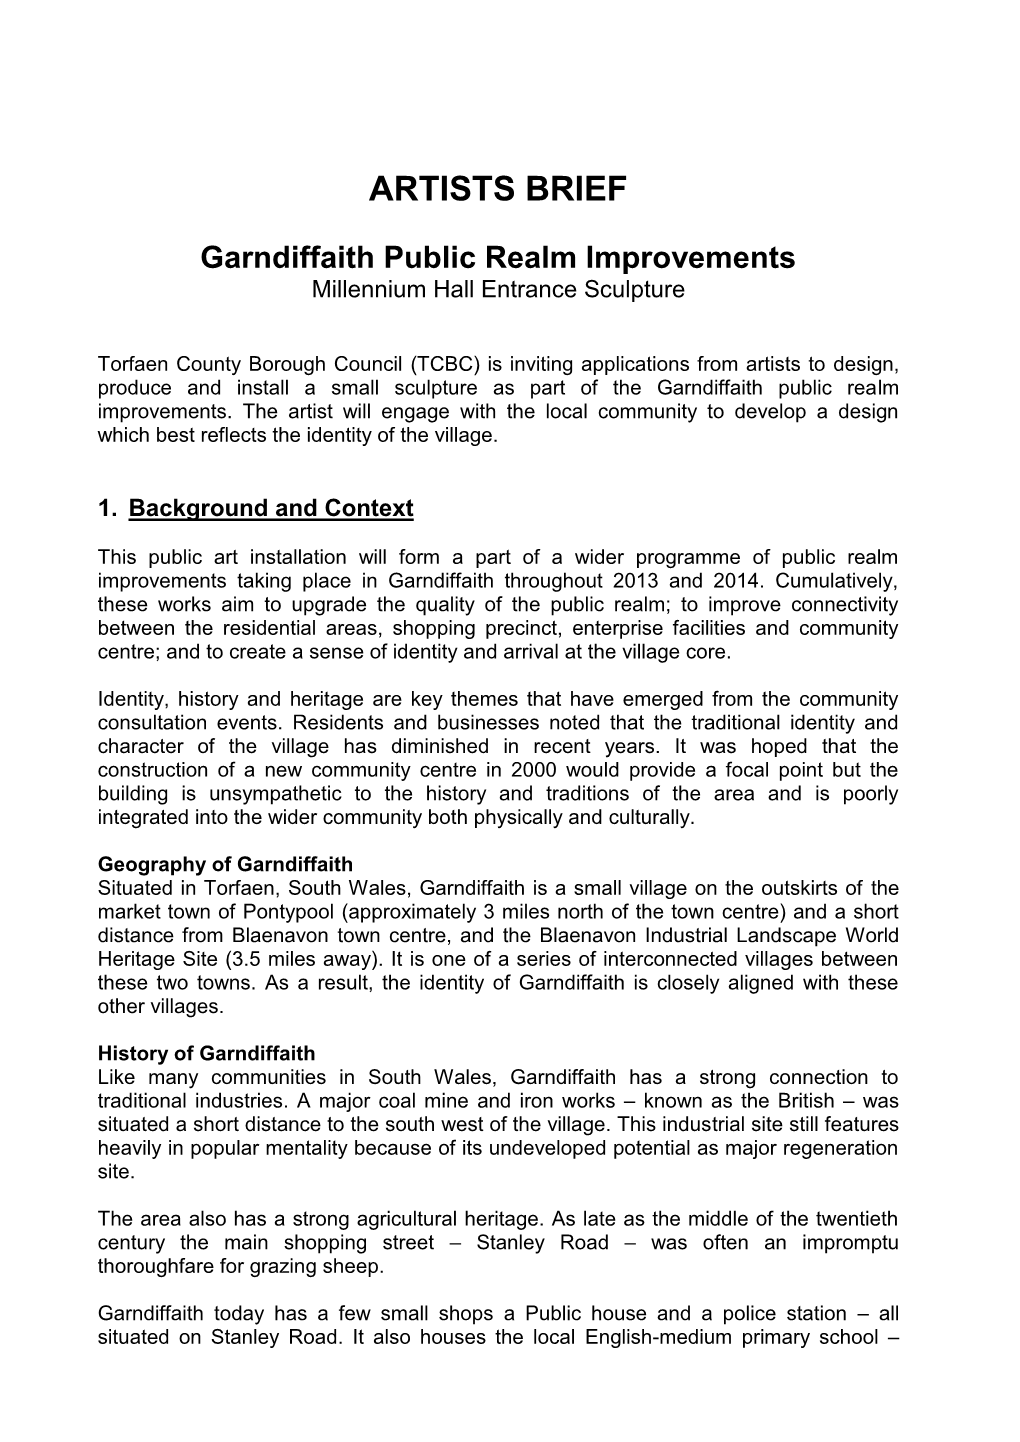 ARTISTS BRIEF Garndiffaith Public Realm Improvements